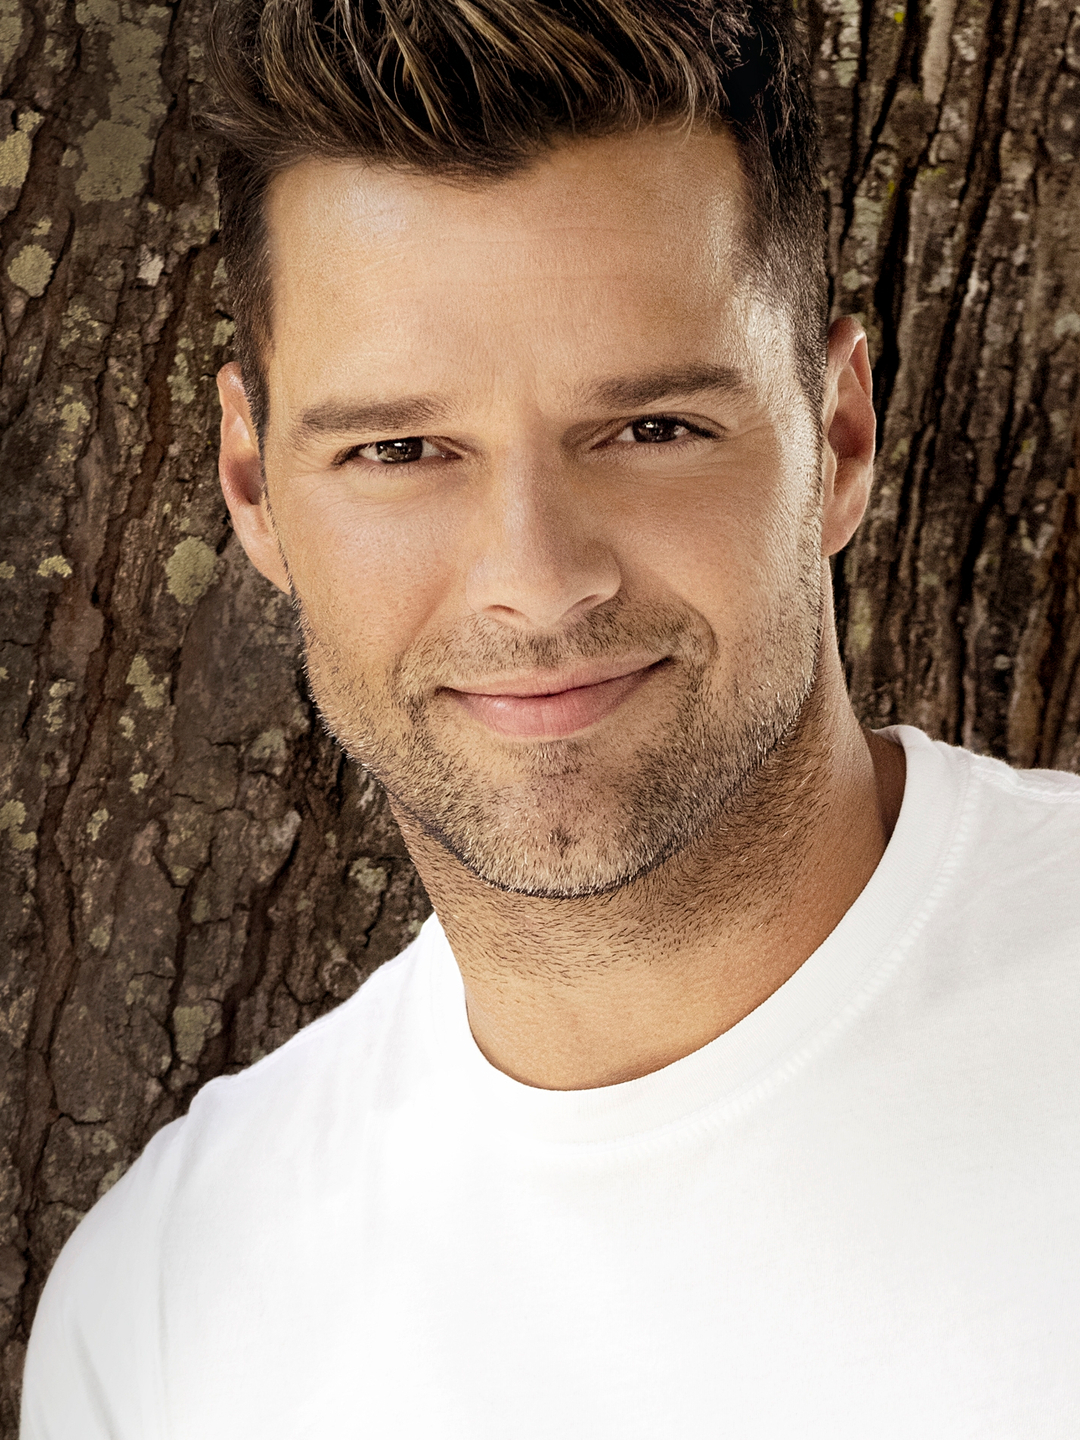 Ricky Martin biography